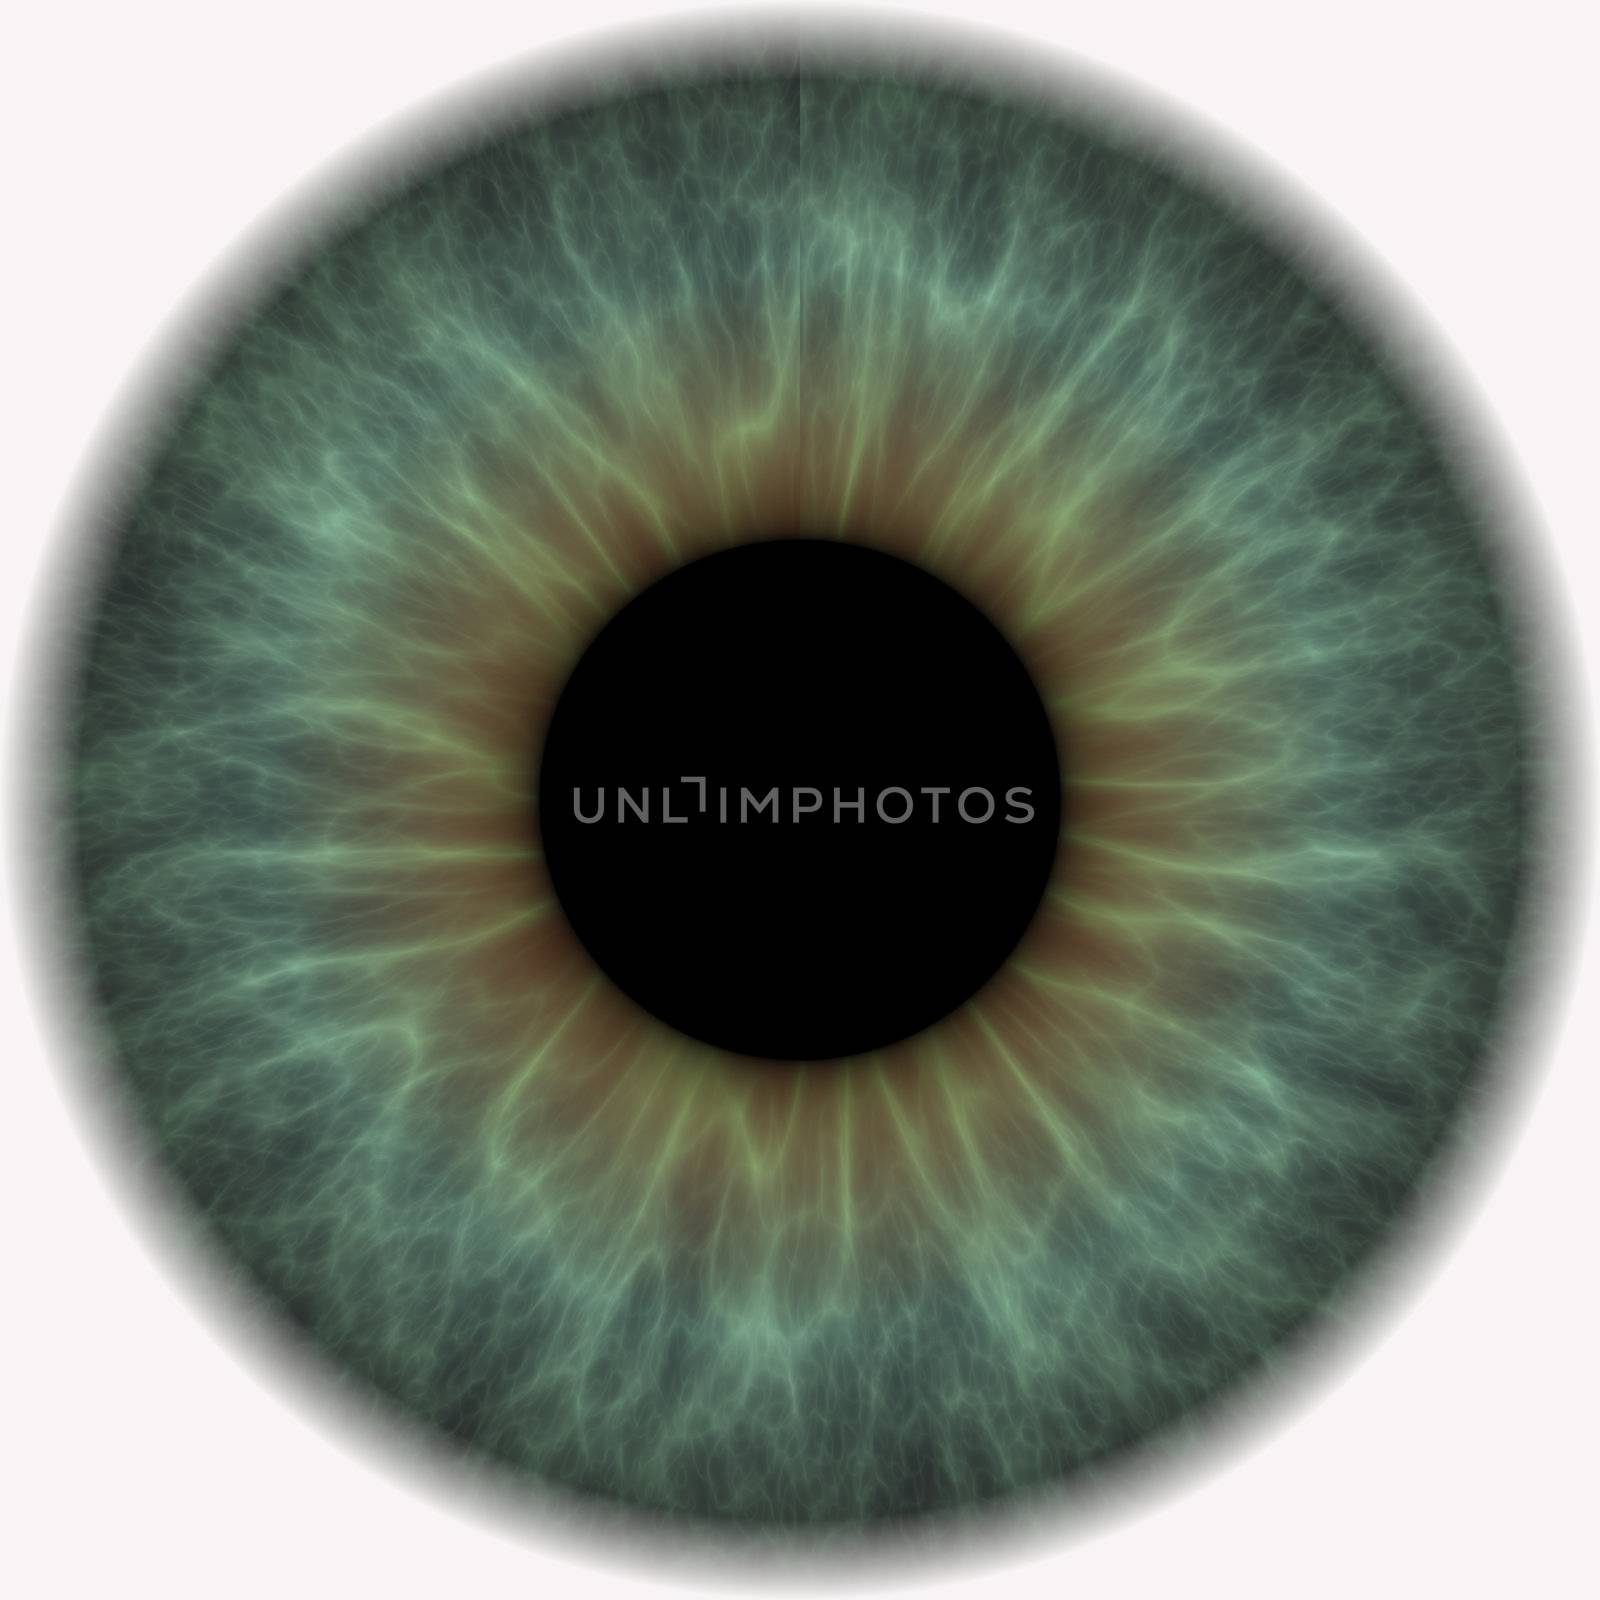 eyeball with lens and iris of the eye